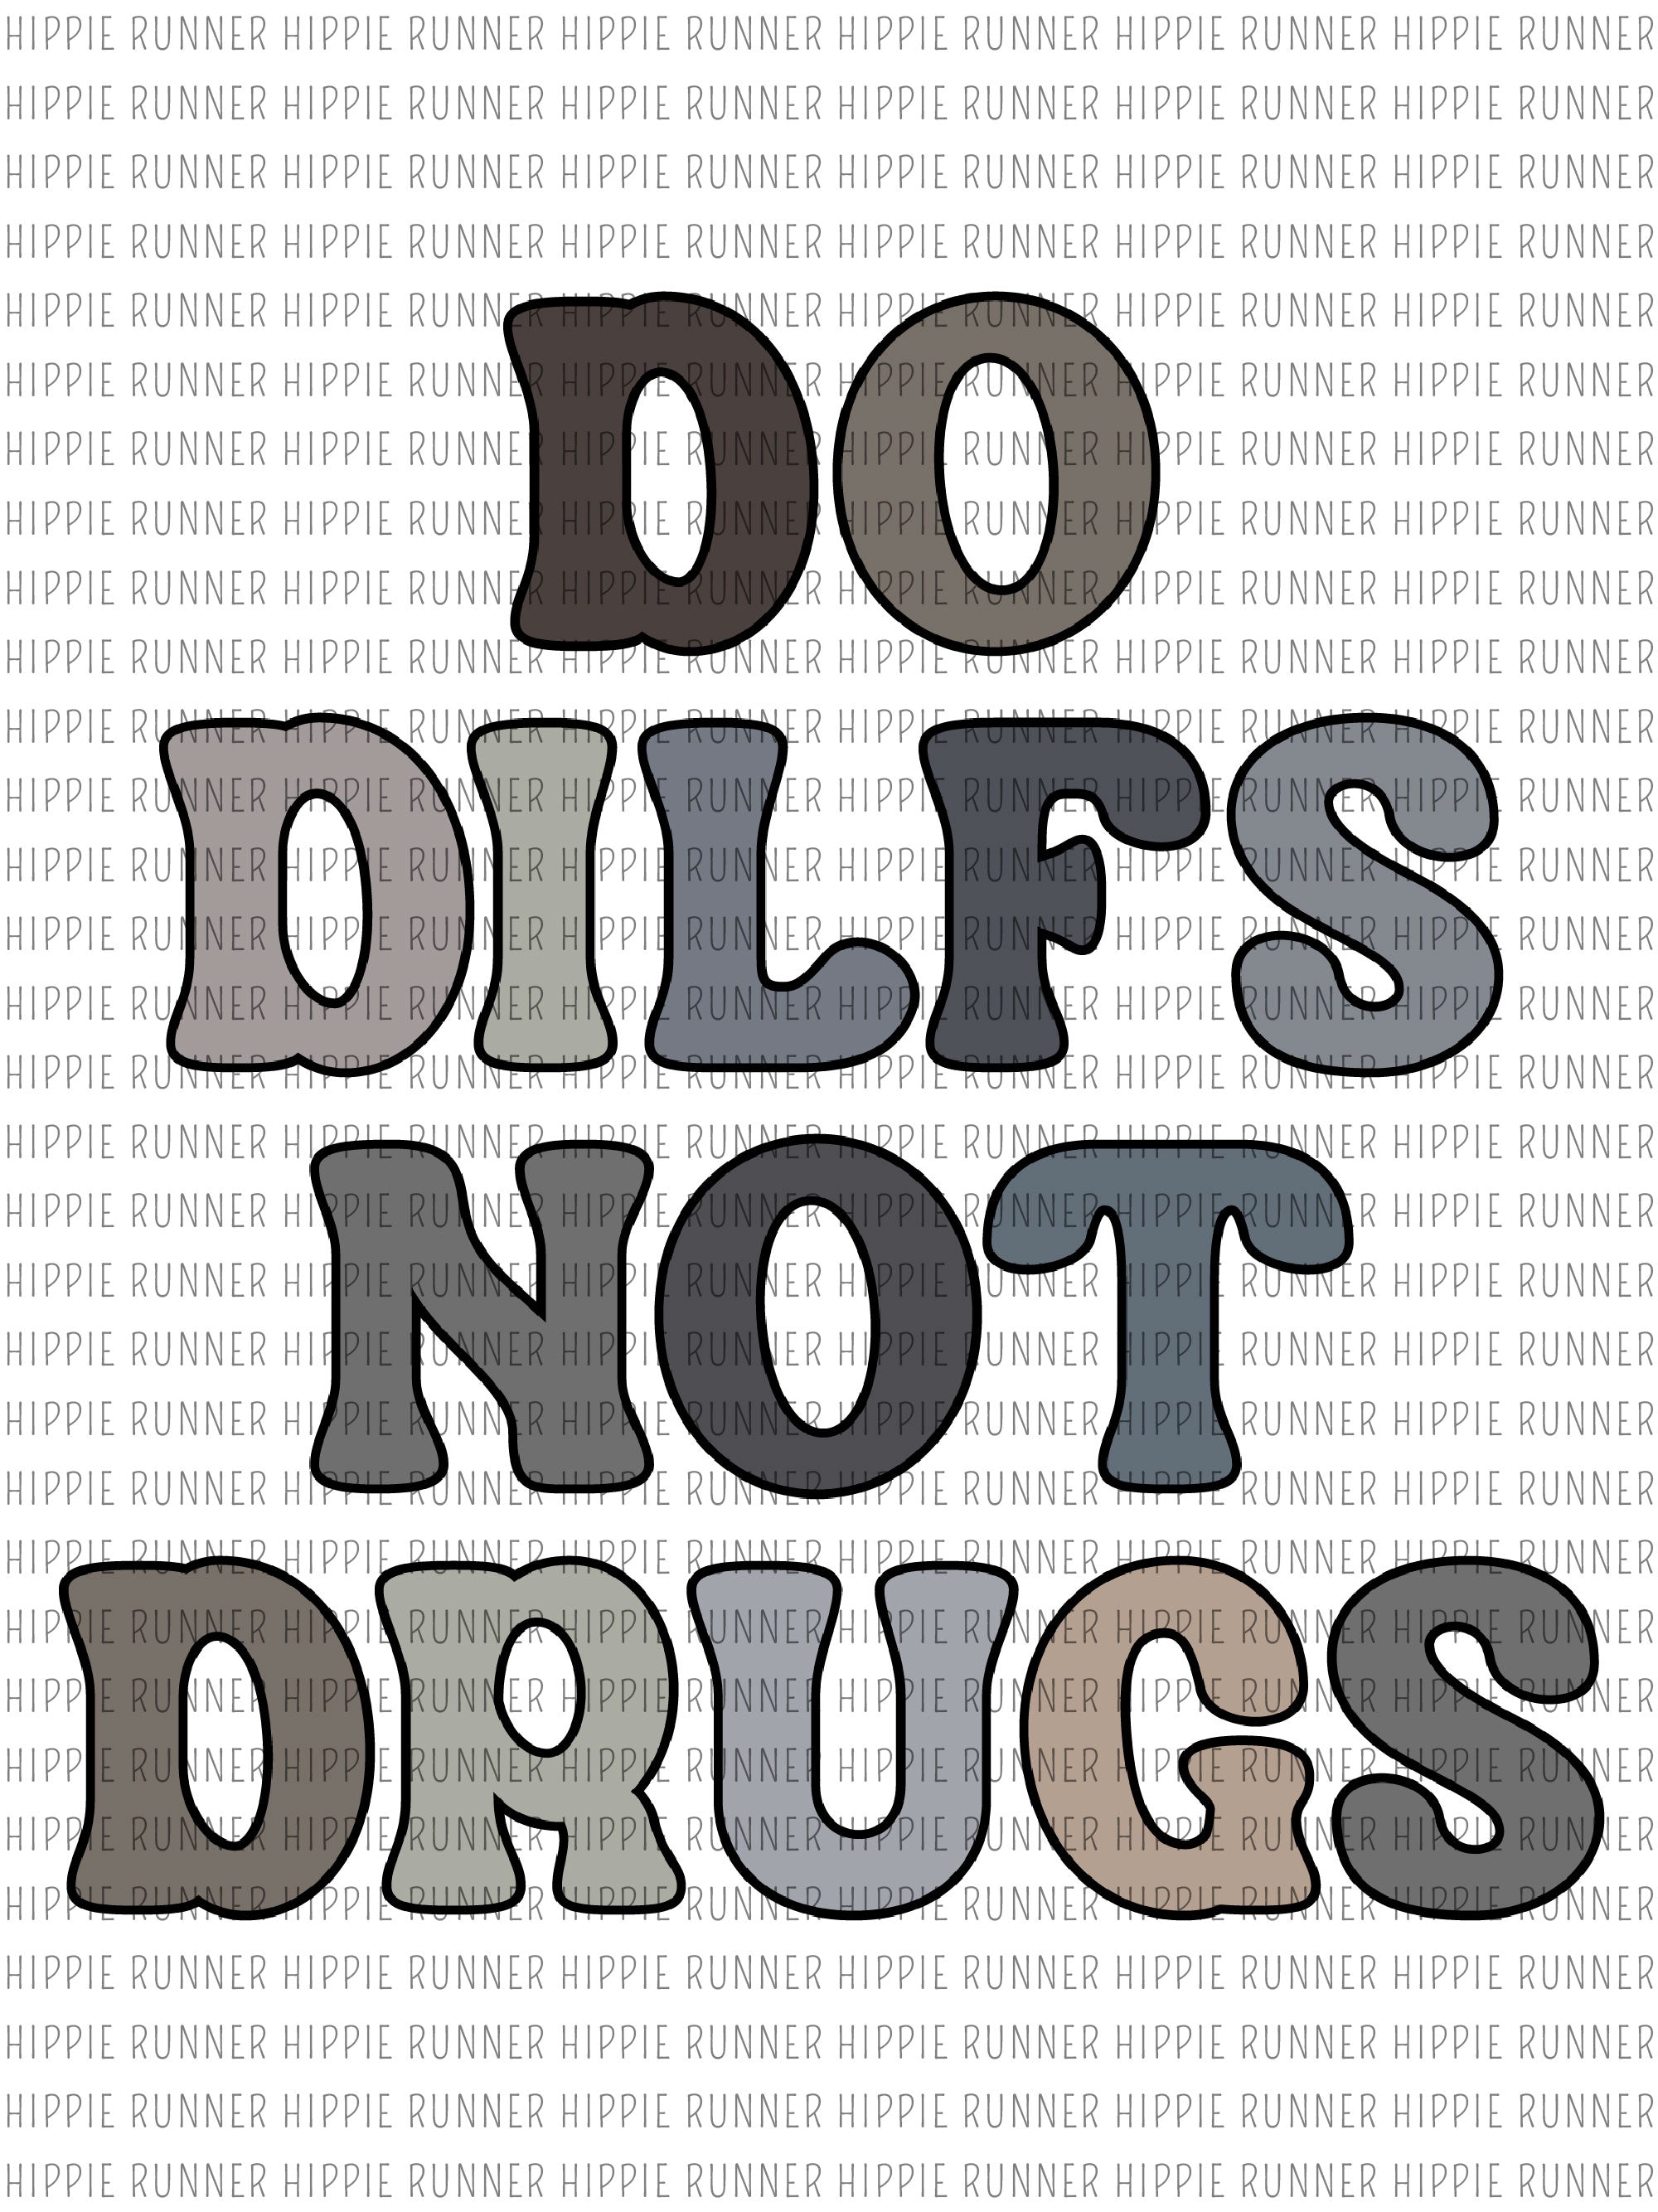 dont do drugs poster